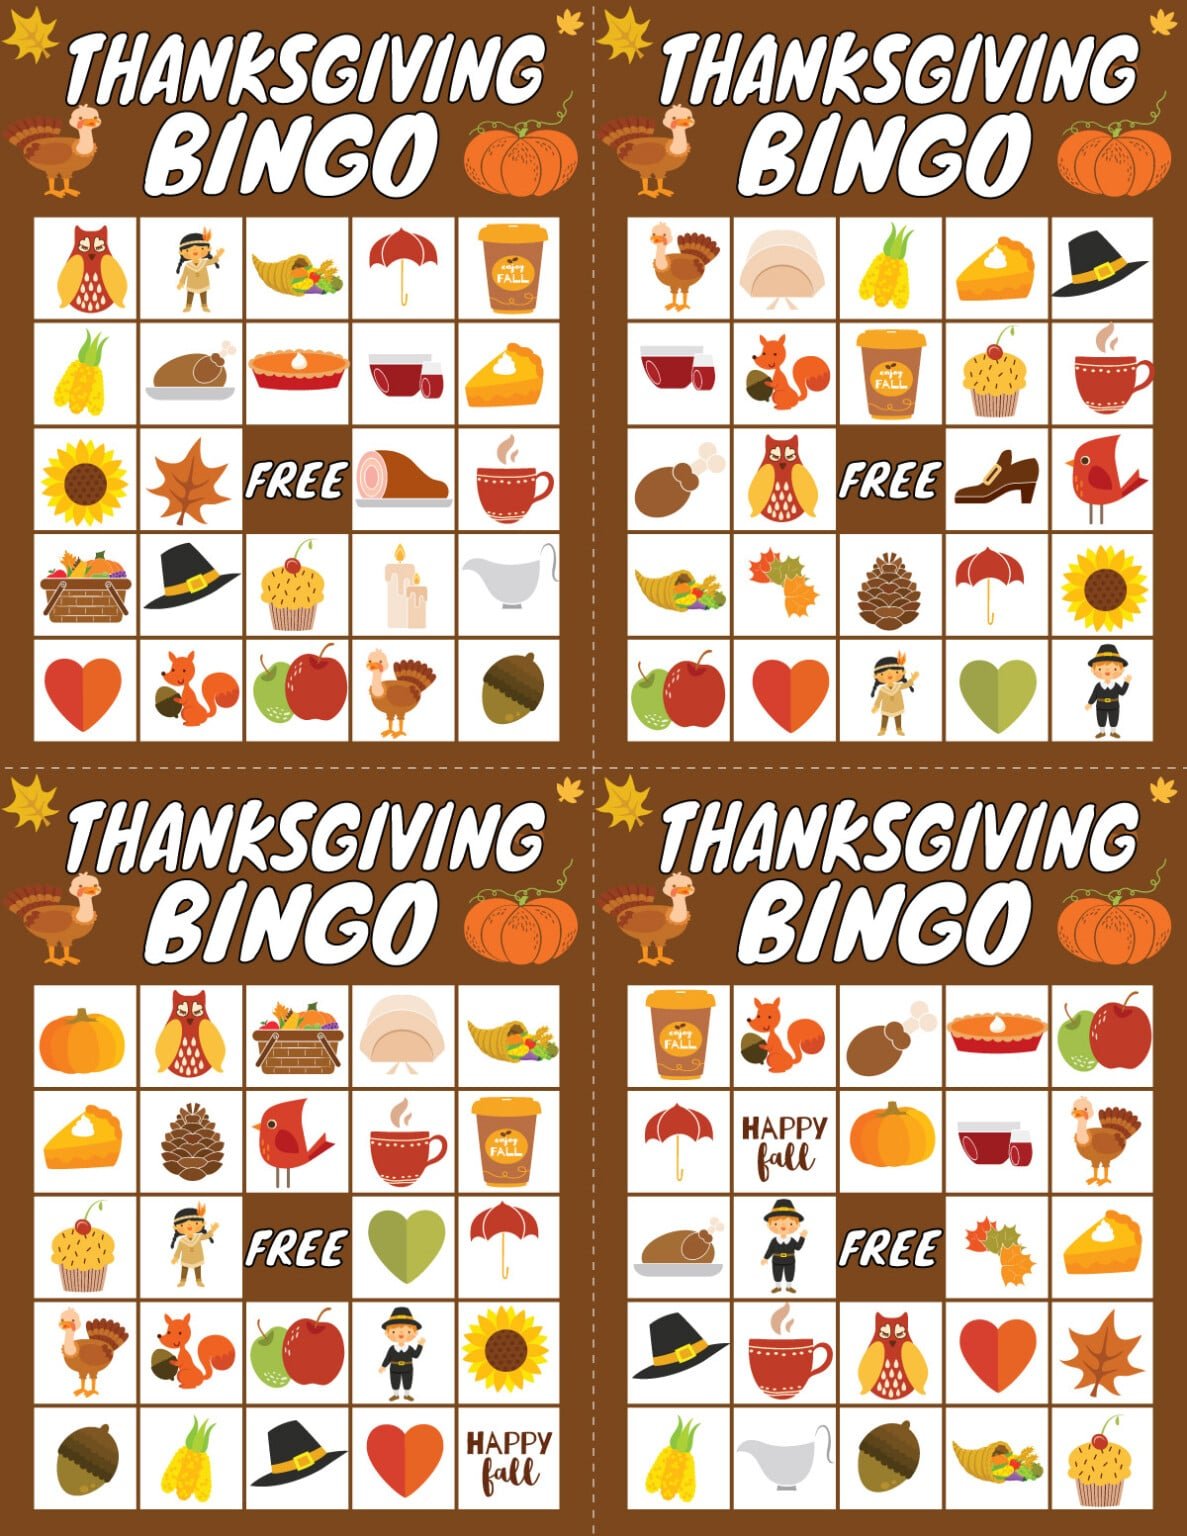 free-printable-thanksgiving-bingo-cards-play-party-plan